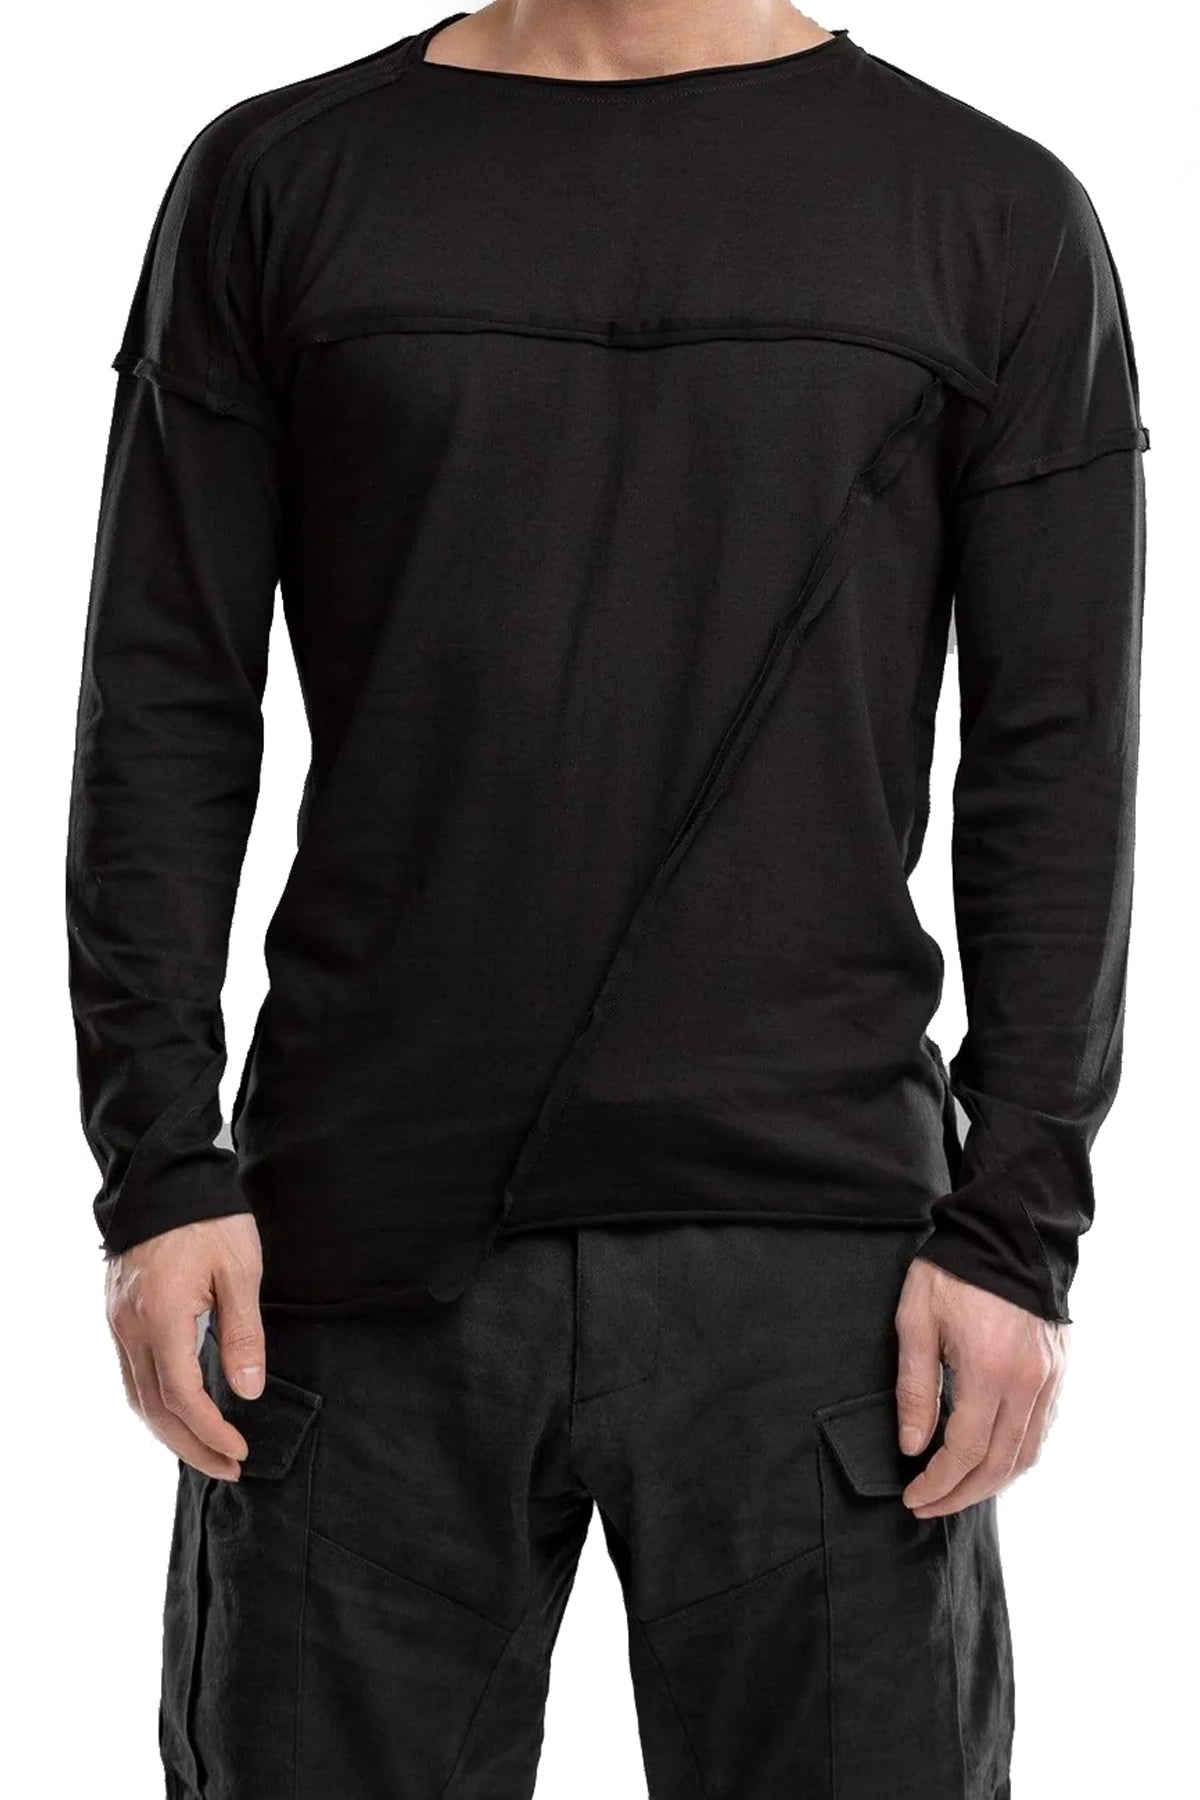 Bundle: 2x Black Long Sleeve T-shirt